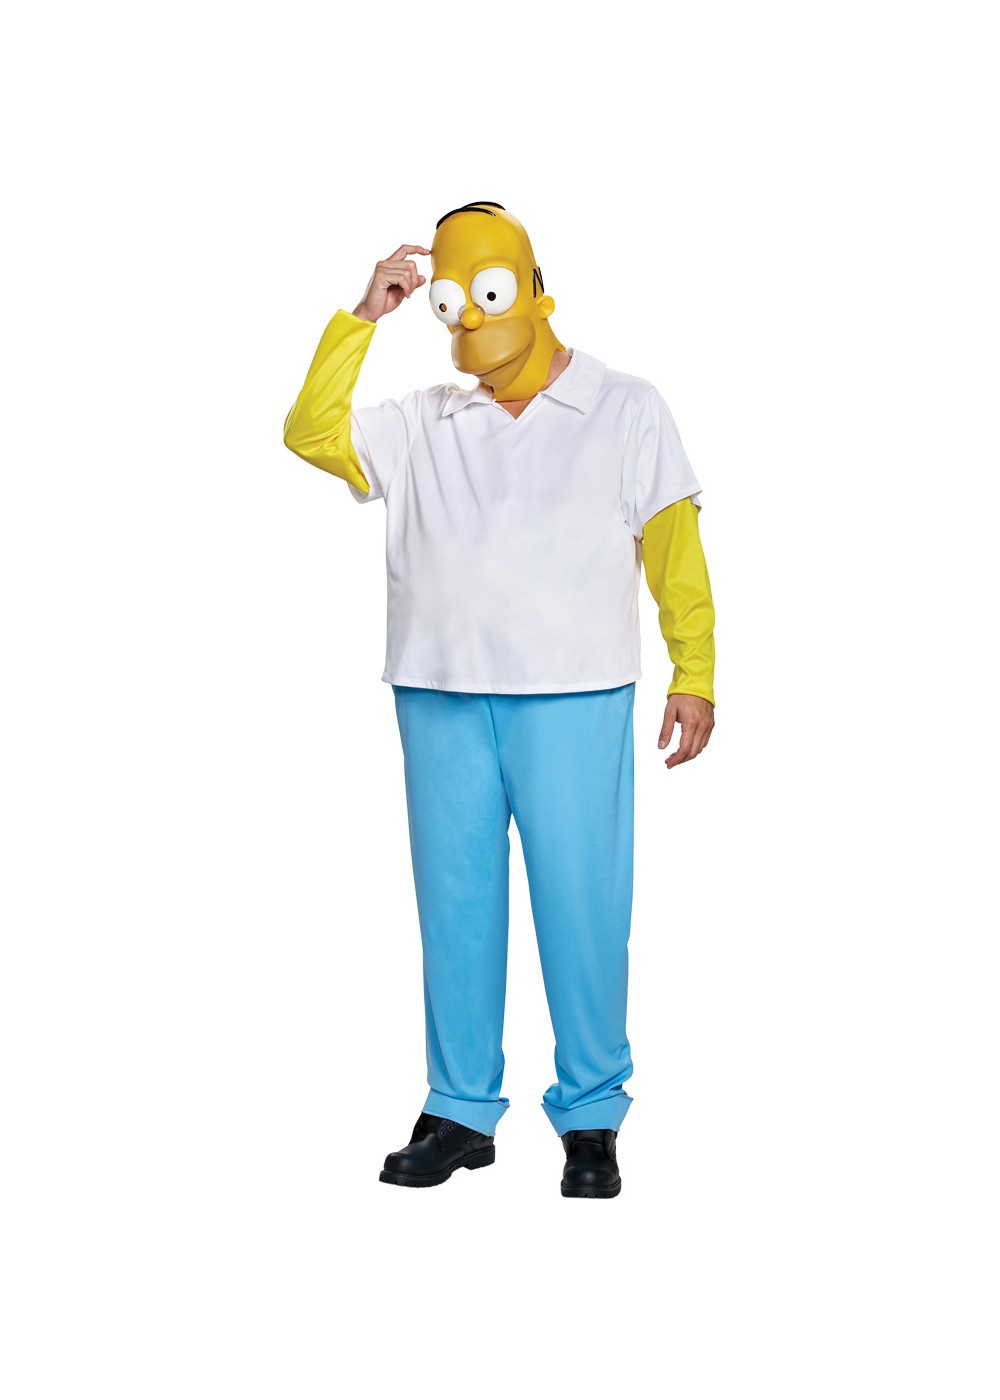 Homer Simpson In Suit